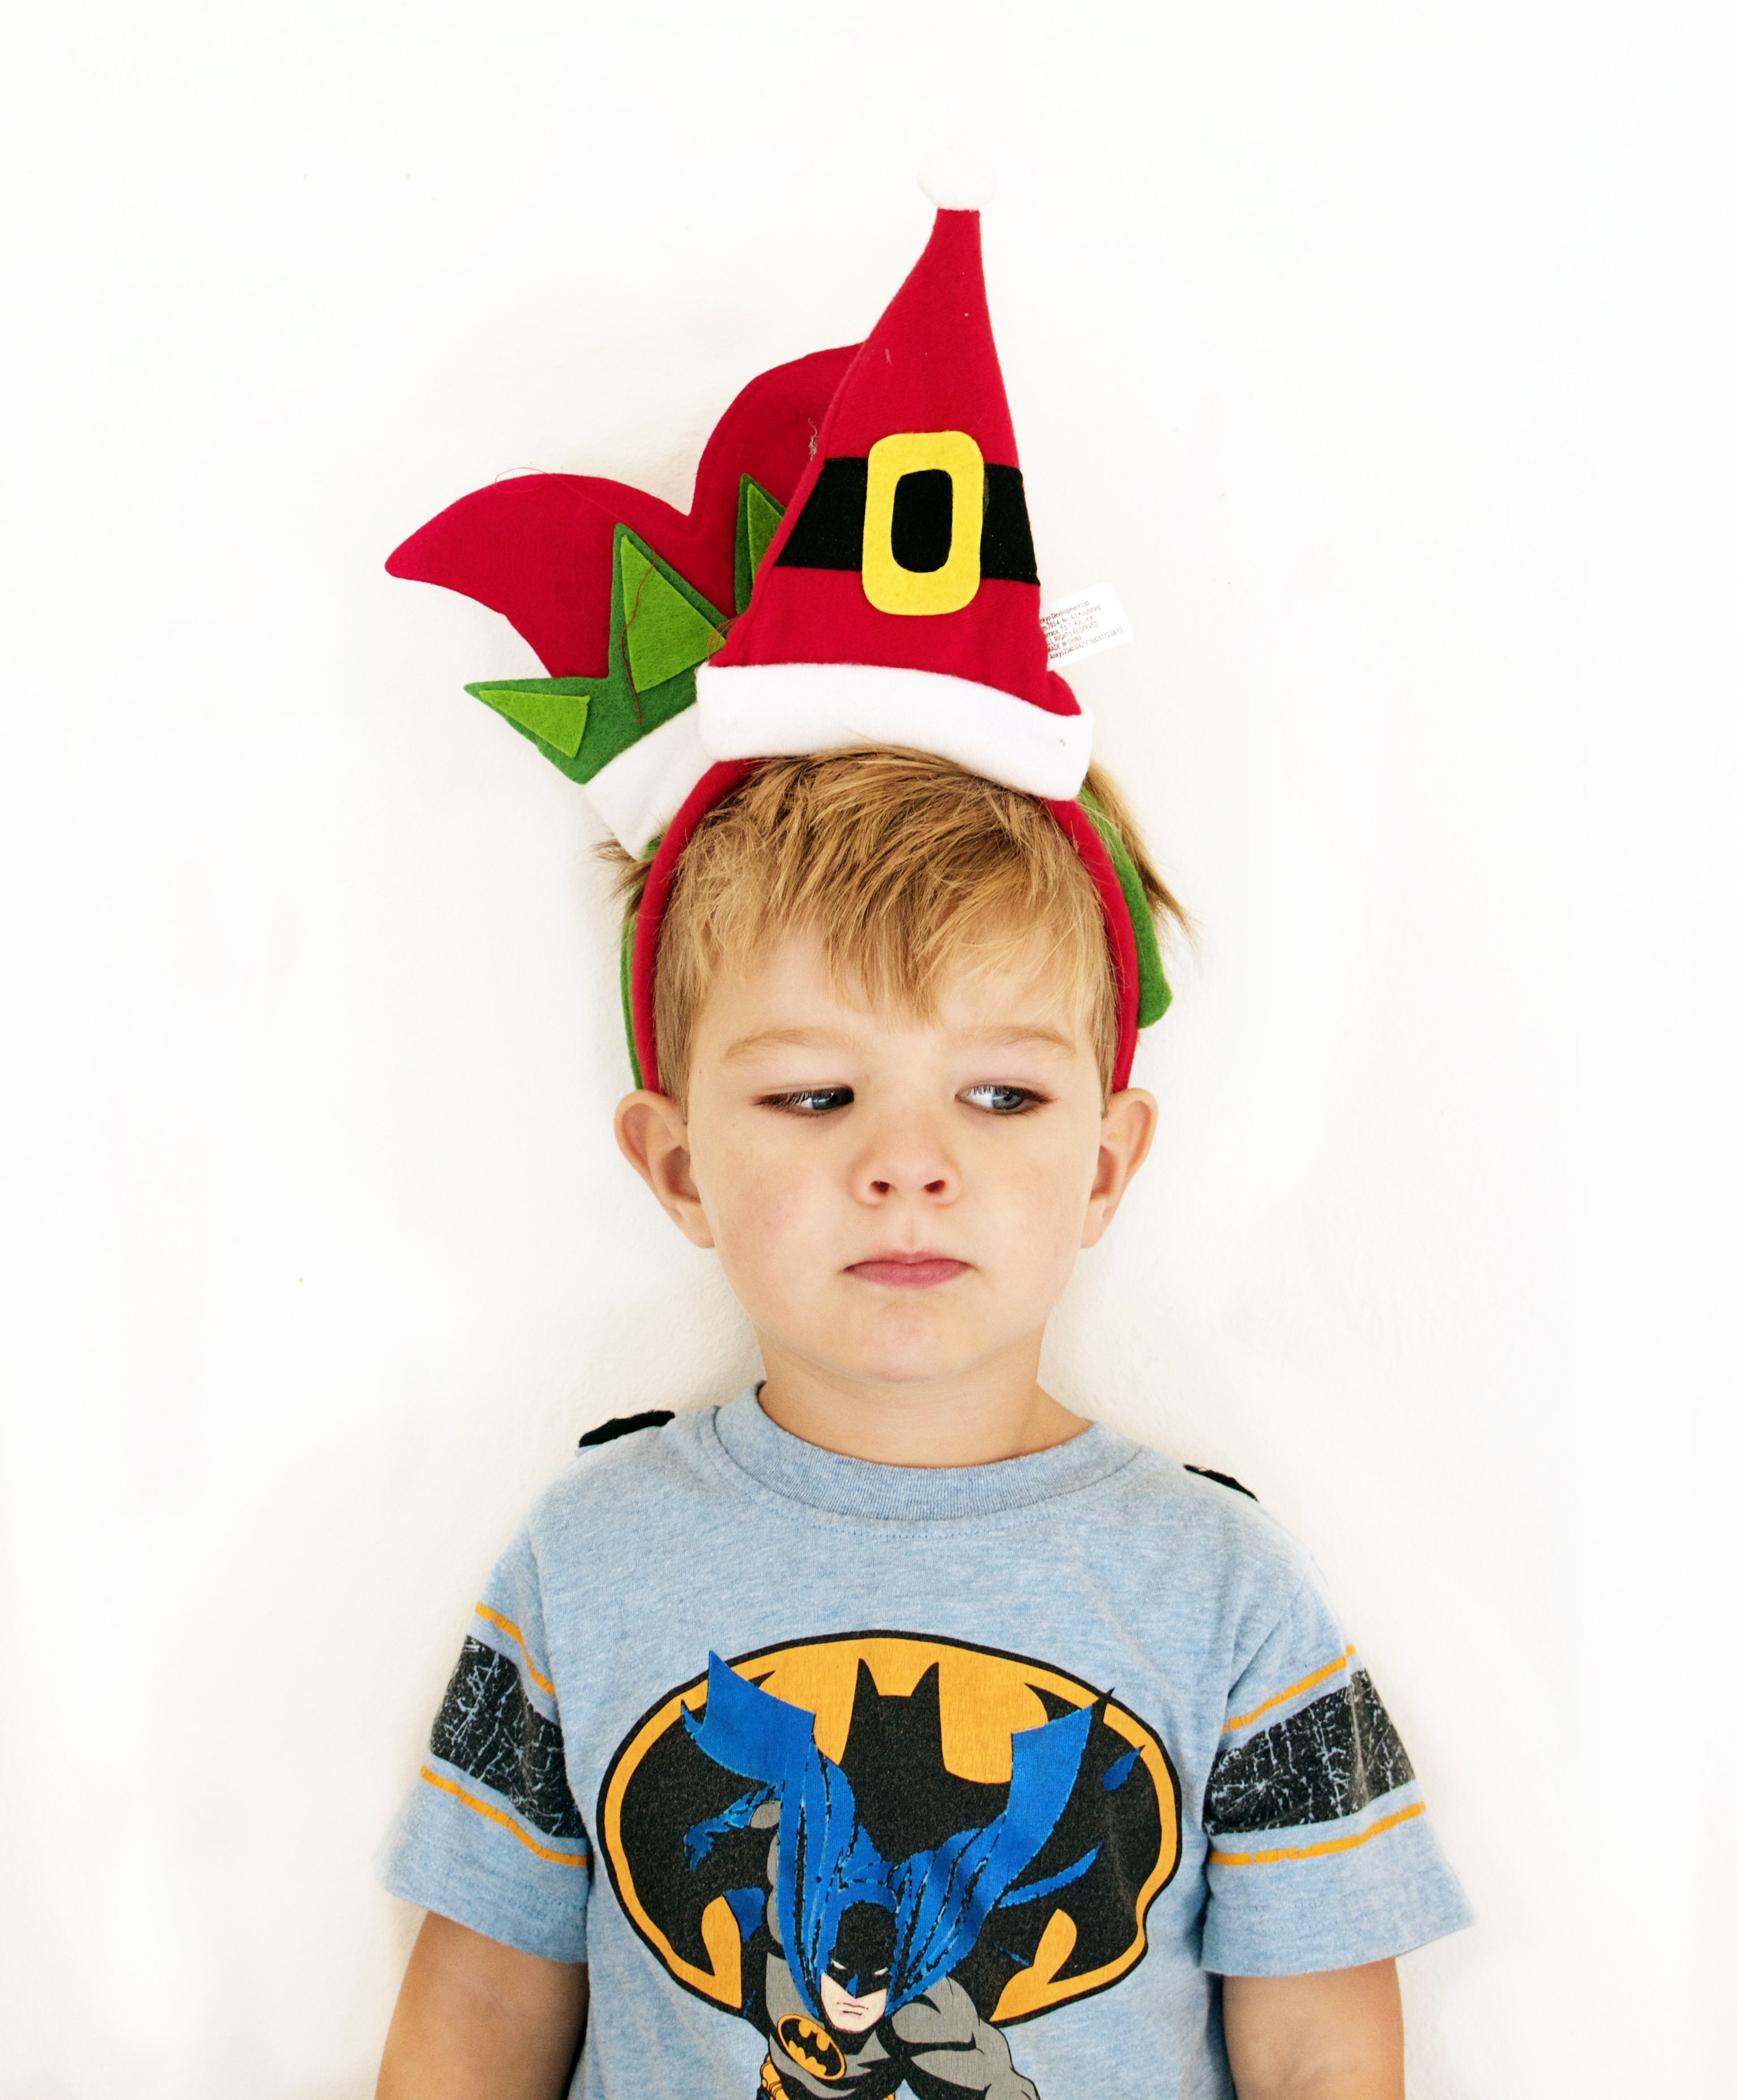 easy kid fun - wear headbands for the holidays - Fabulistas